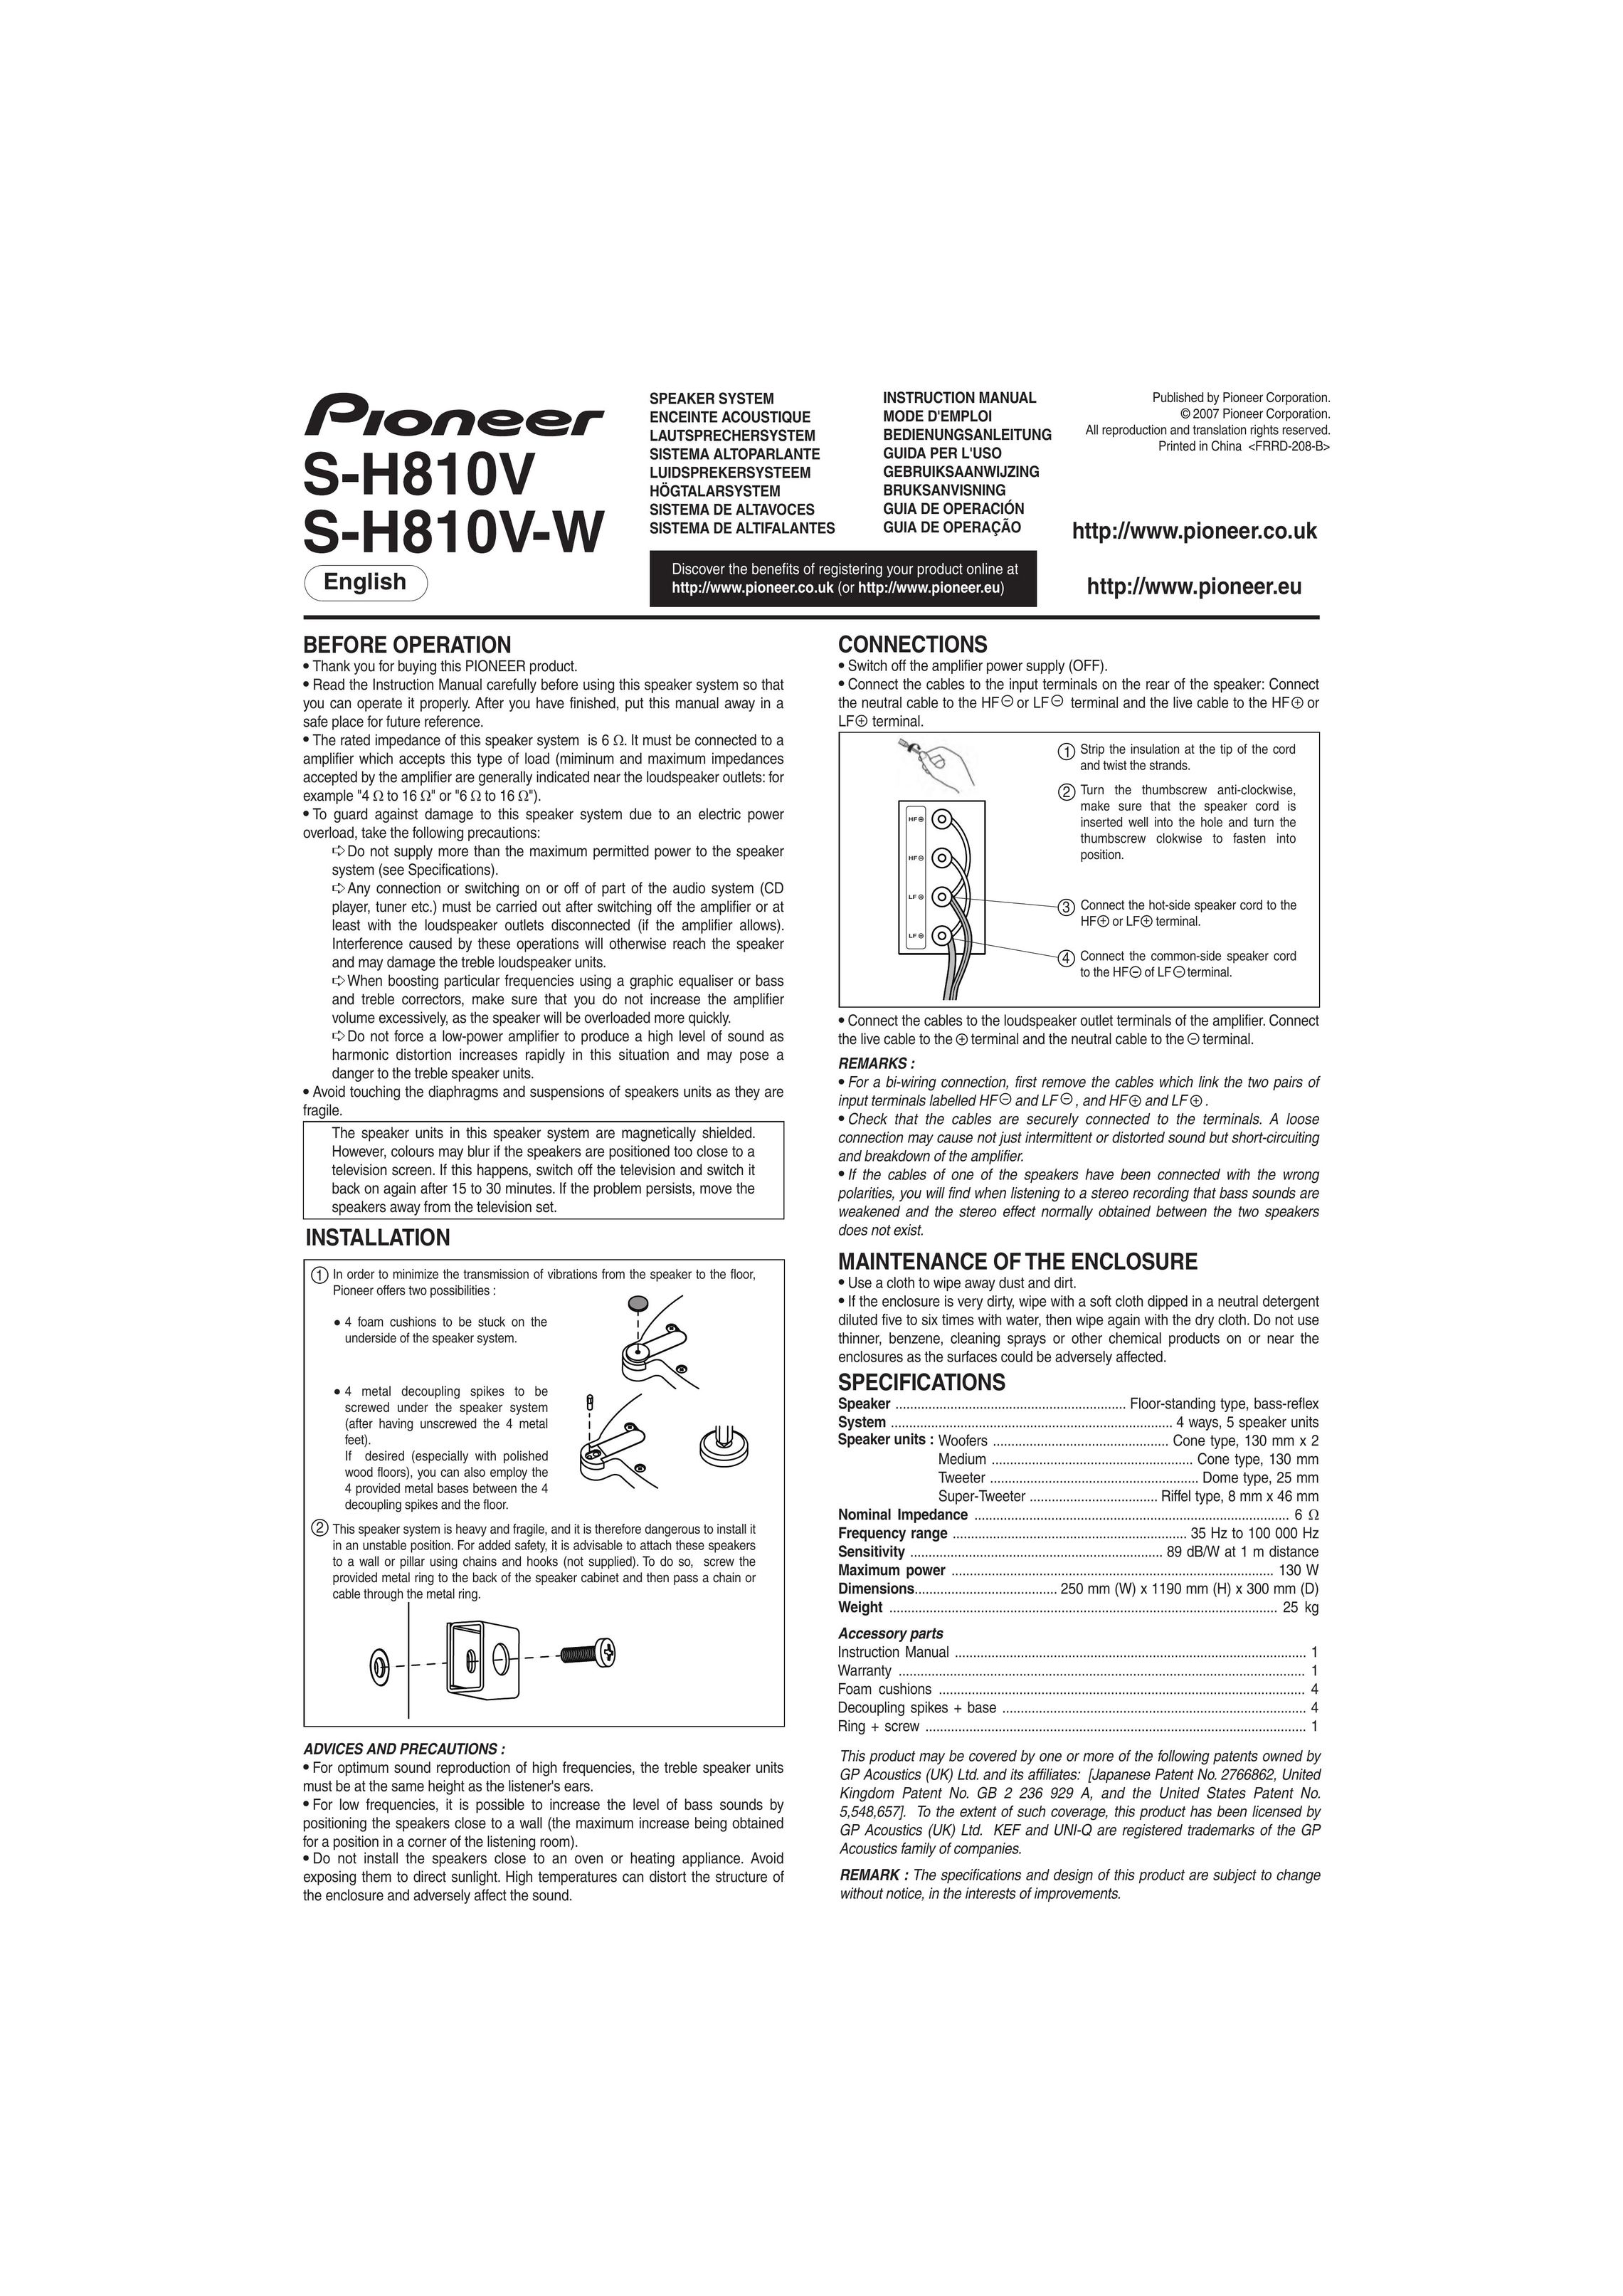 Pioneer S-H810V-W Speaker System User Manual